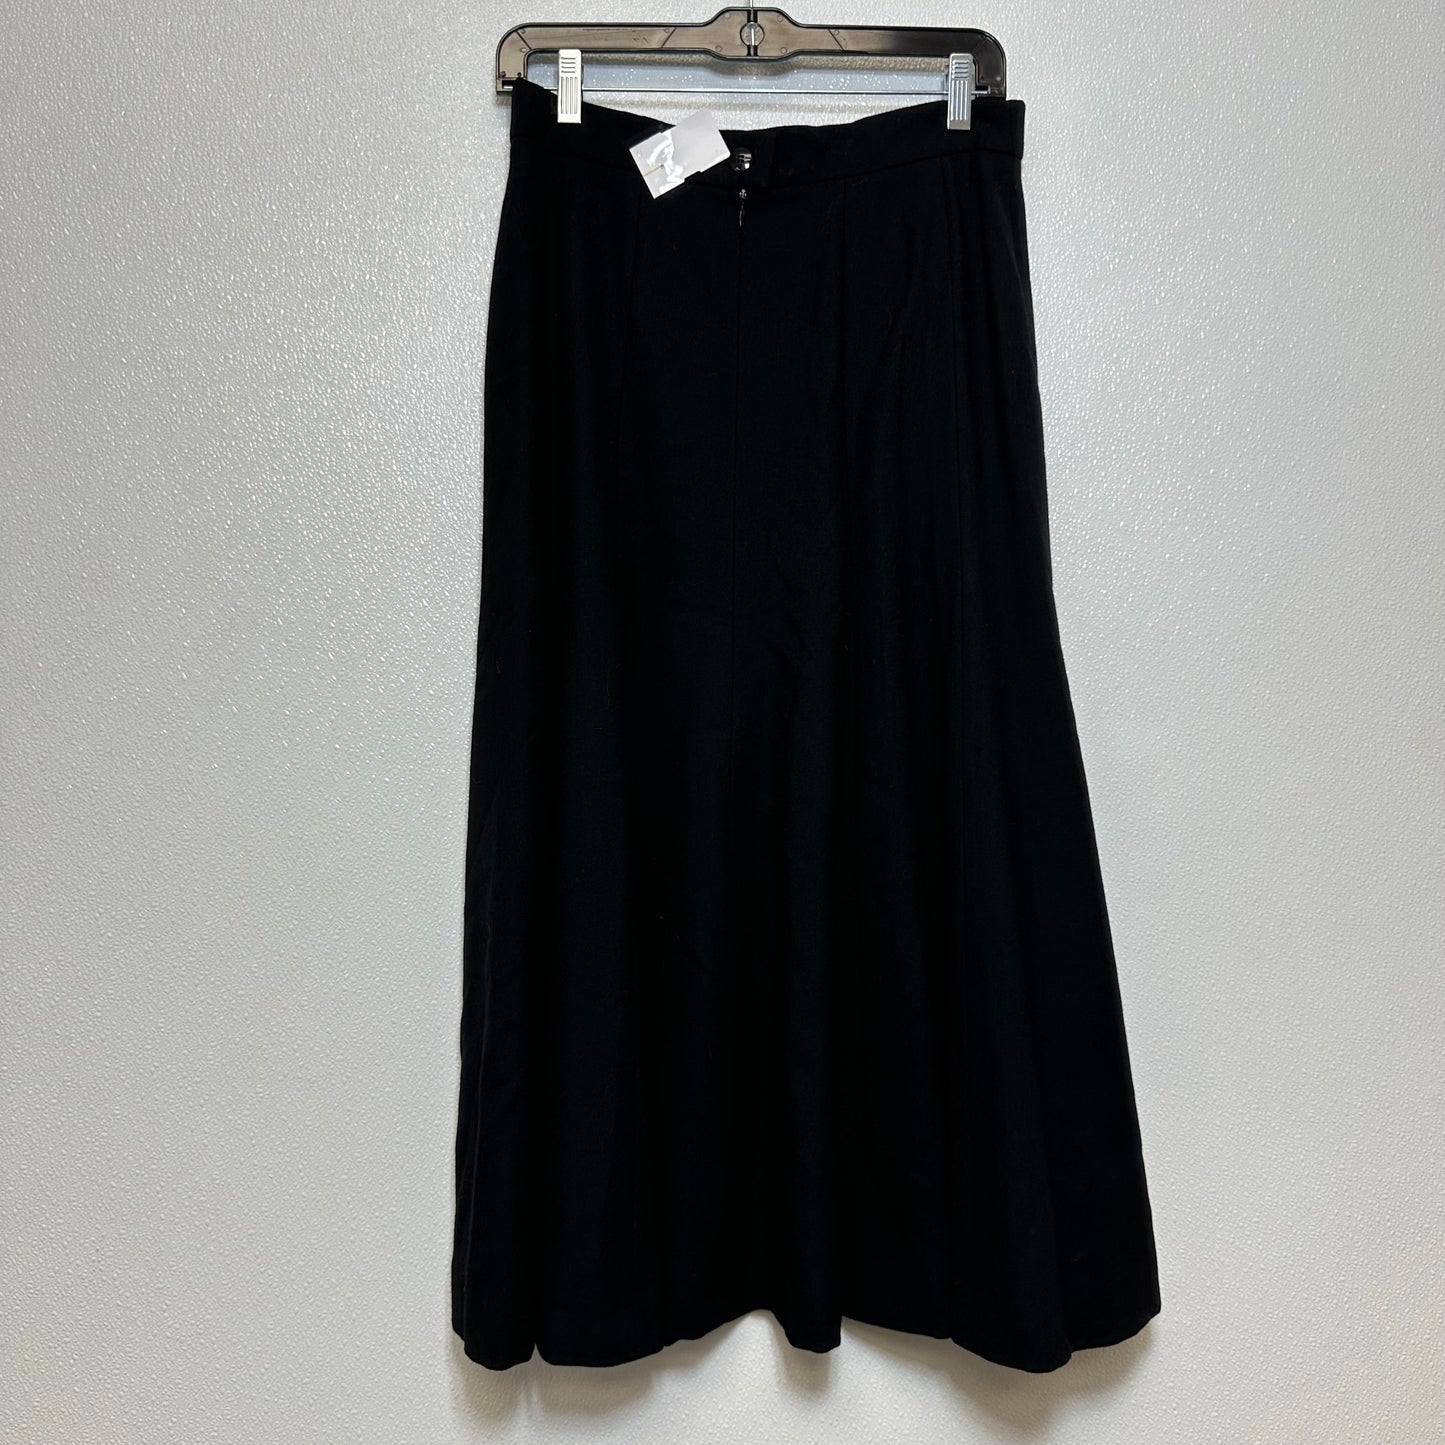 Skirt Midi By Escada  Size: 40